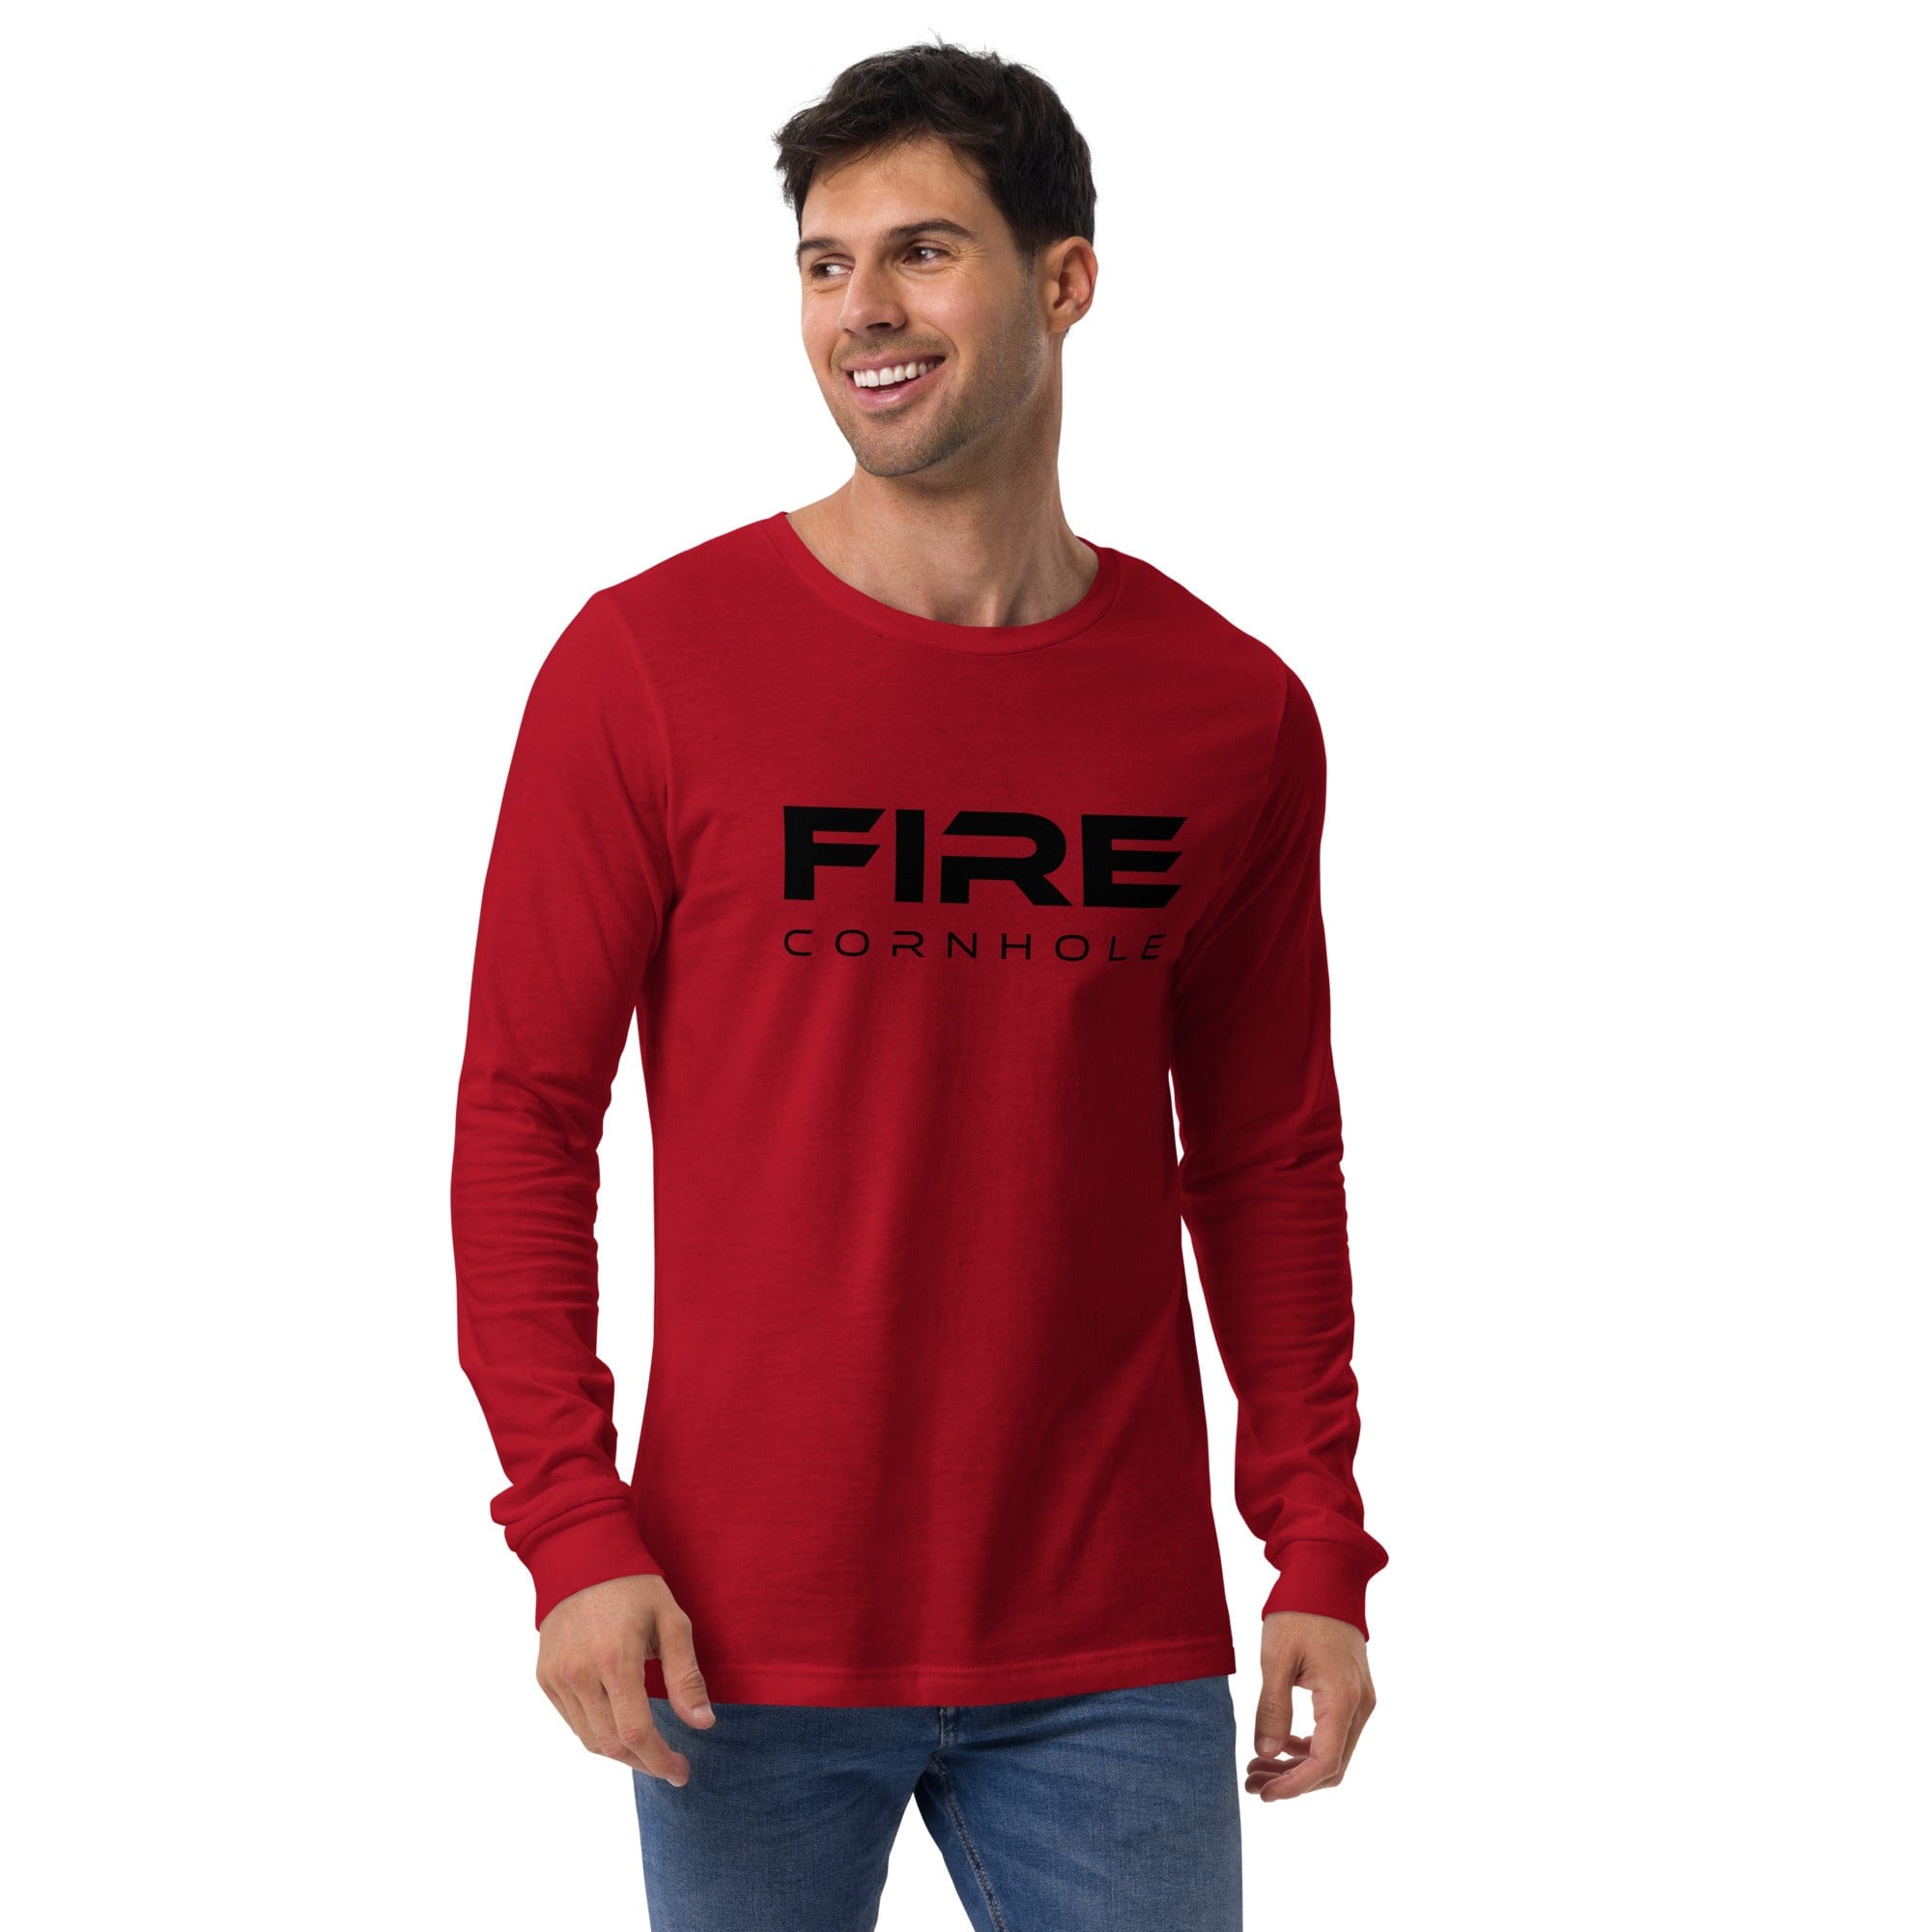 Red unisex cotton longsleeve shirt with Fire Cornhole logo in black